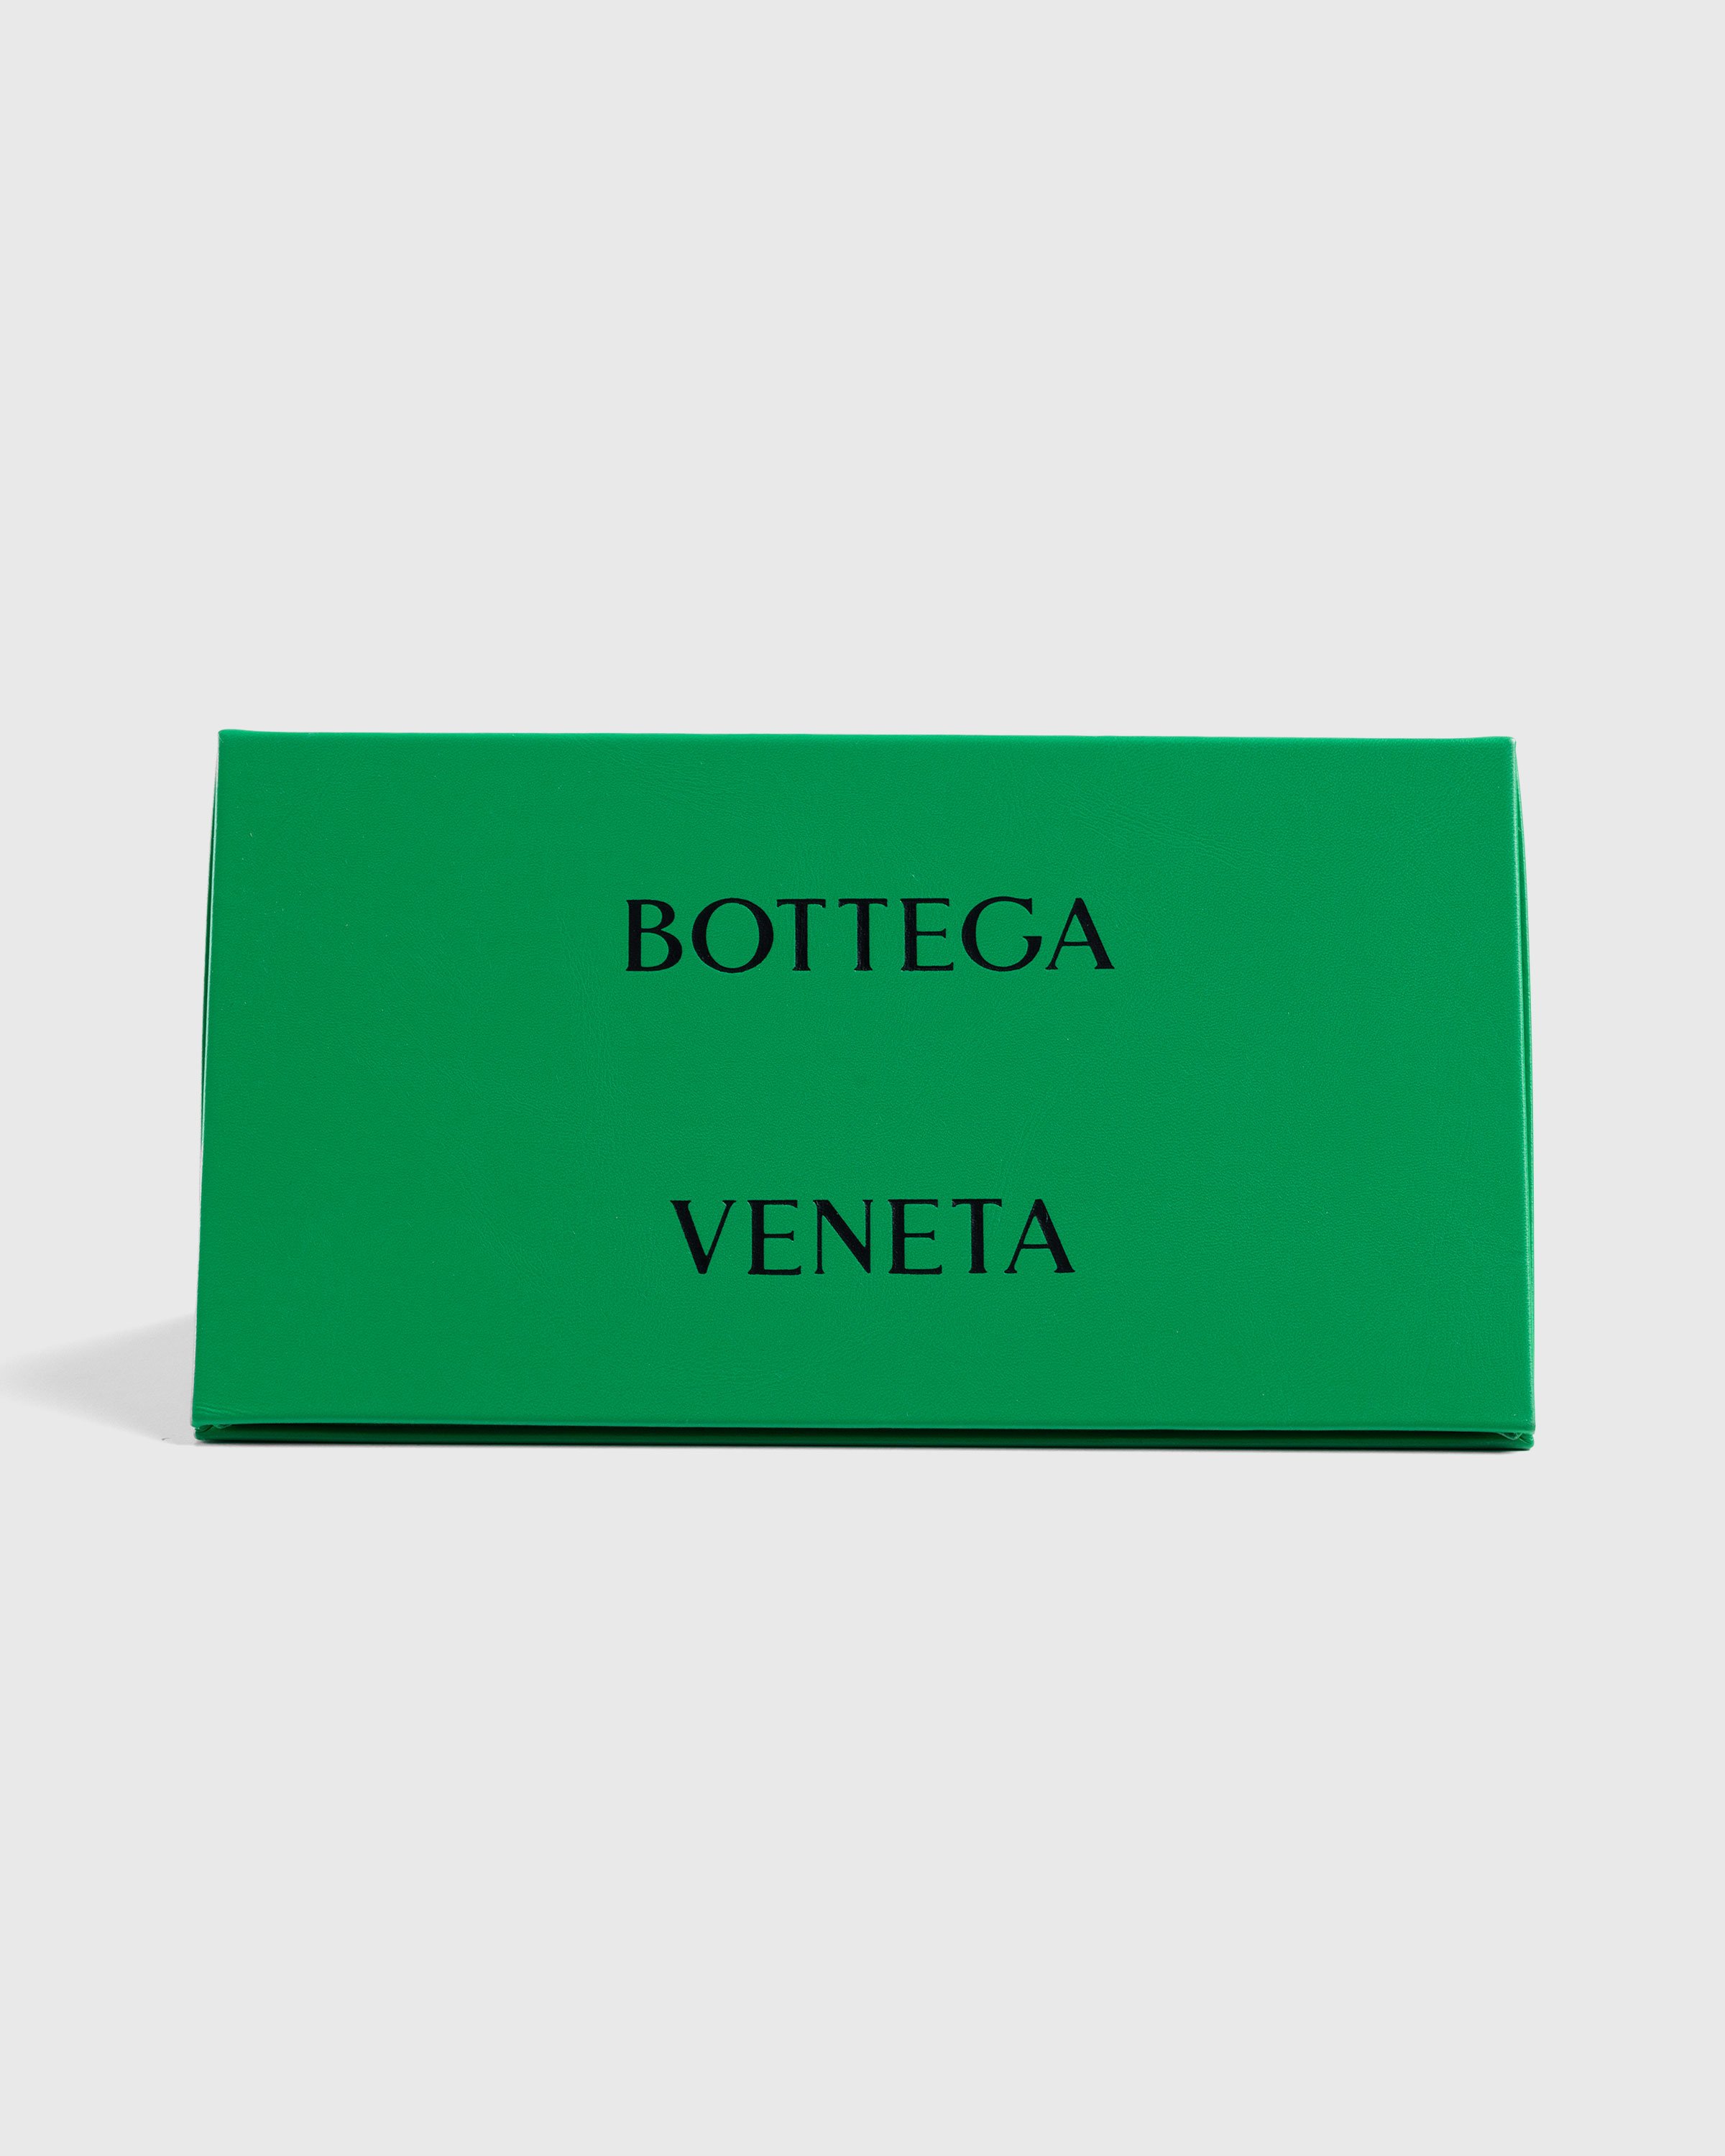 Bottega Veneta - Mitre Square Rounded Injected Acetate Sunglasses Black/Green - Accessories - Black - Image 5